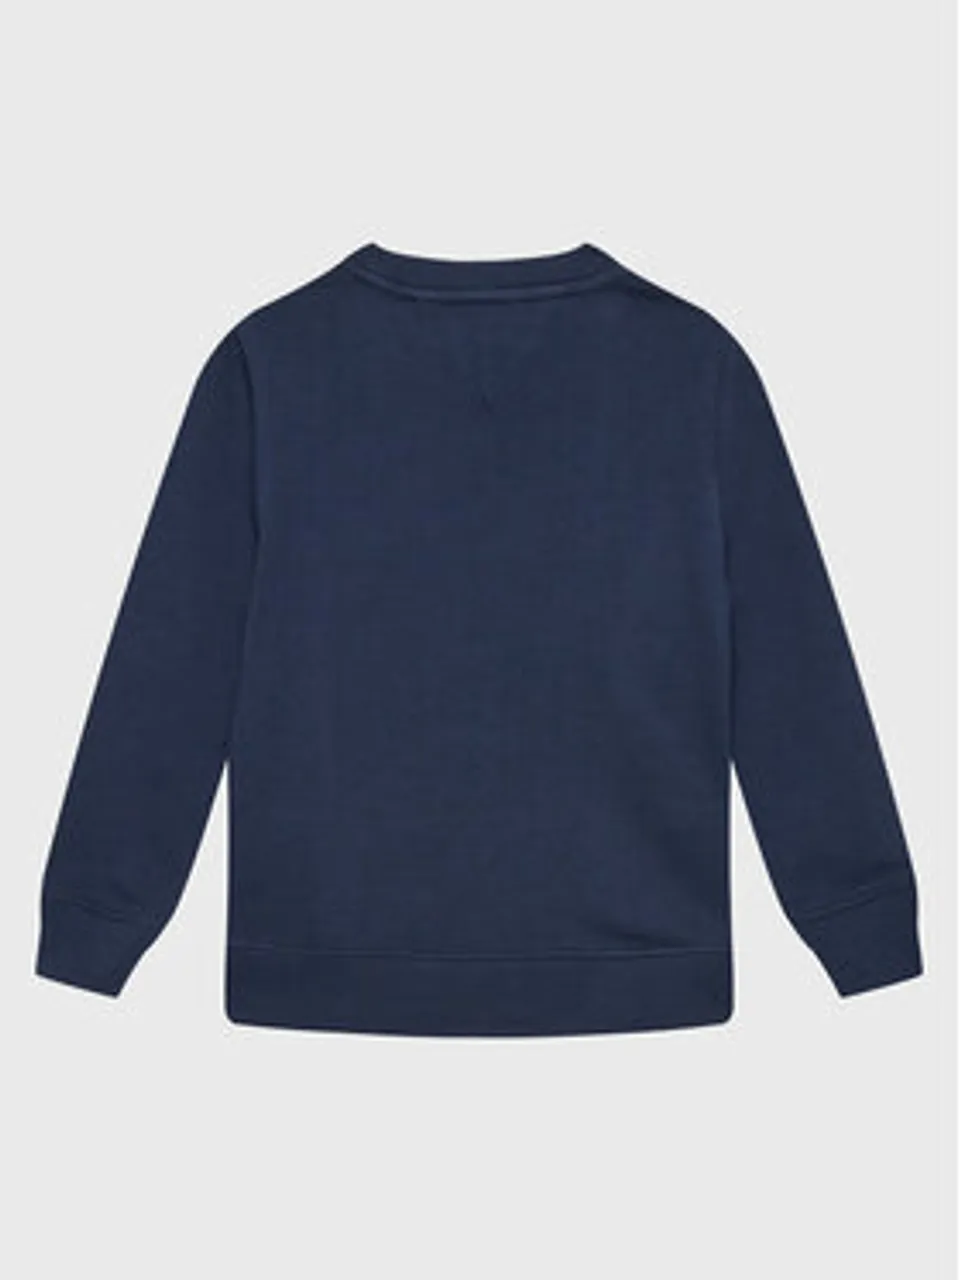 Tommy Hilfiger Sweatshirt Essential KS0KS00212 M Dunkelblau Regular Fit